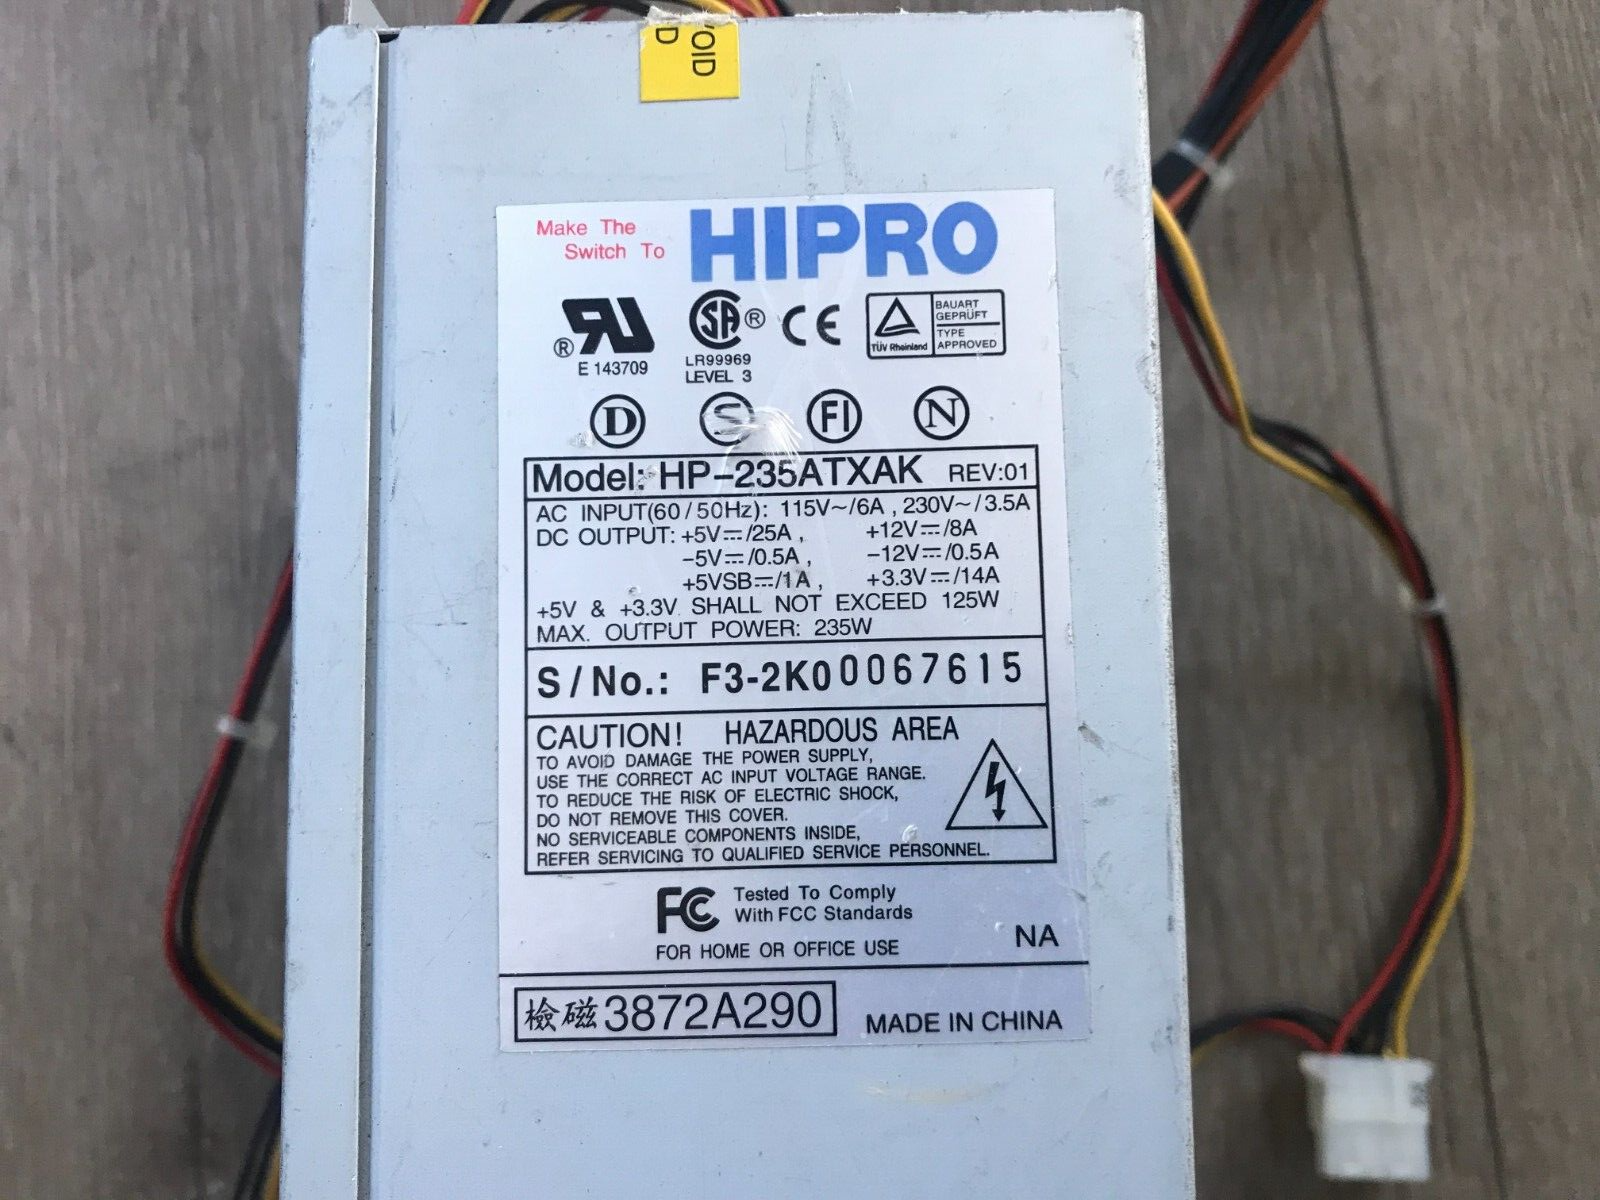 Hipro HP-235ATXAK 235W Desktop Power Supply